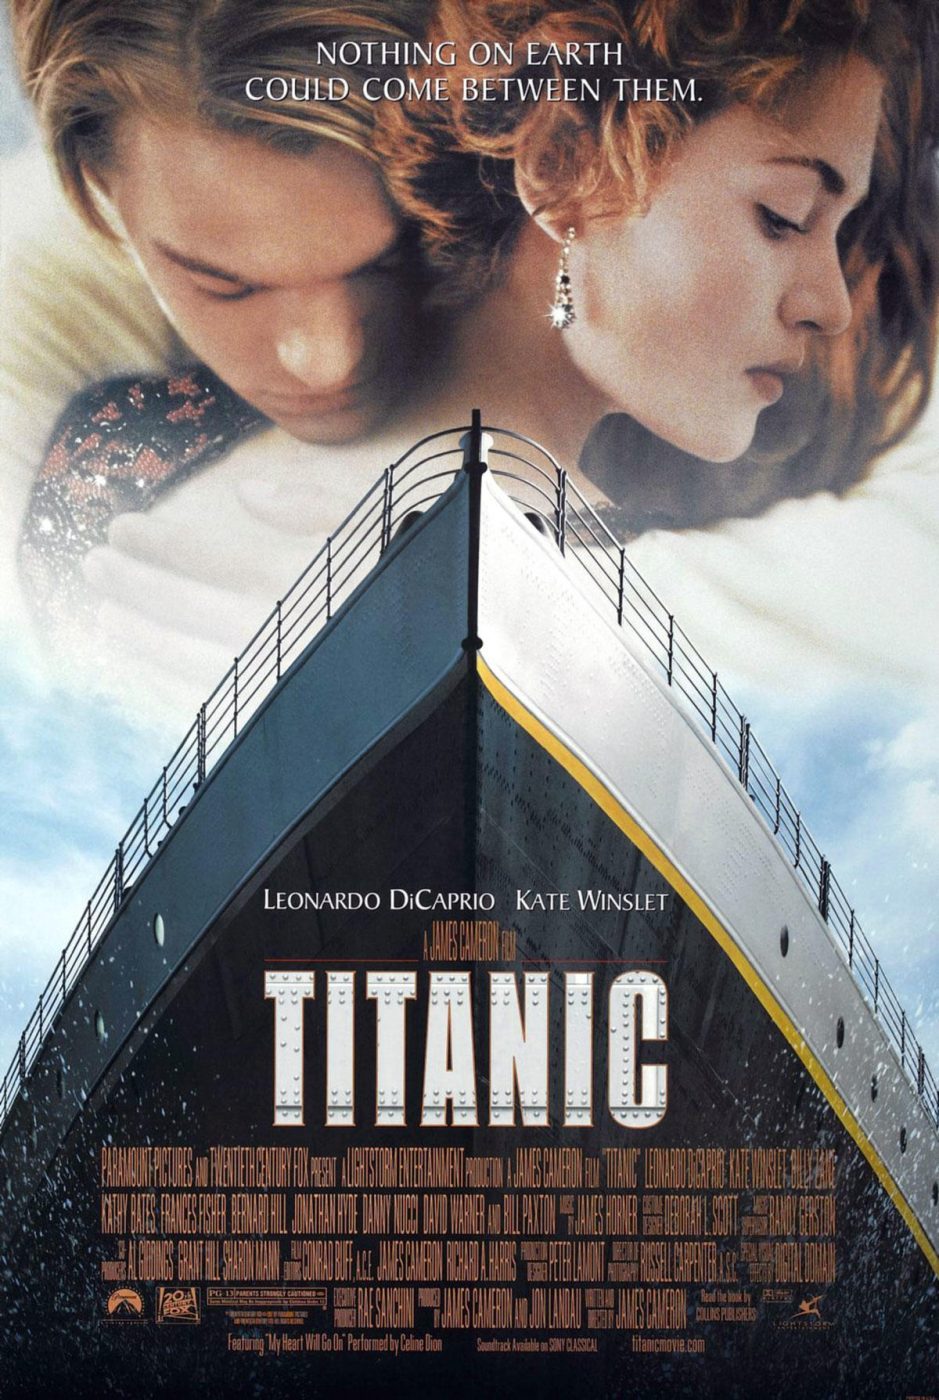 Mediaset trasmette in prima serata Titanic